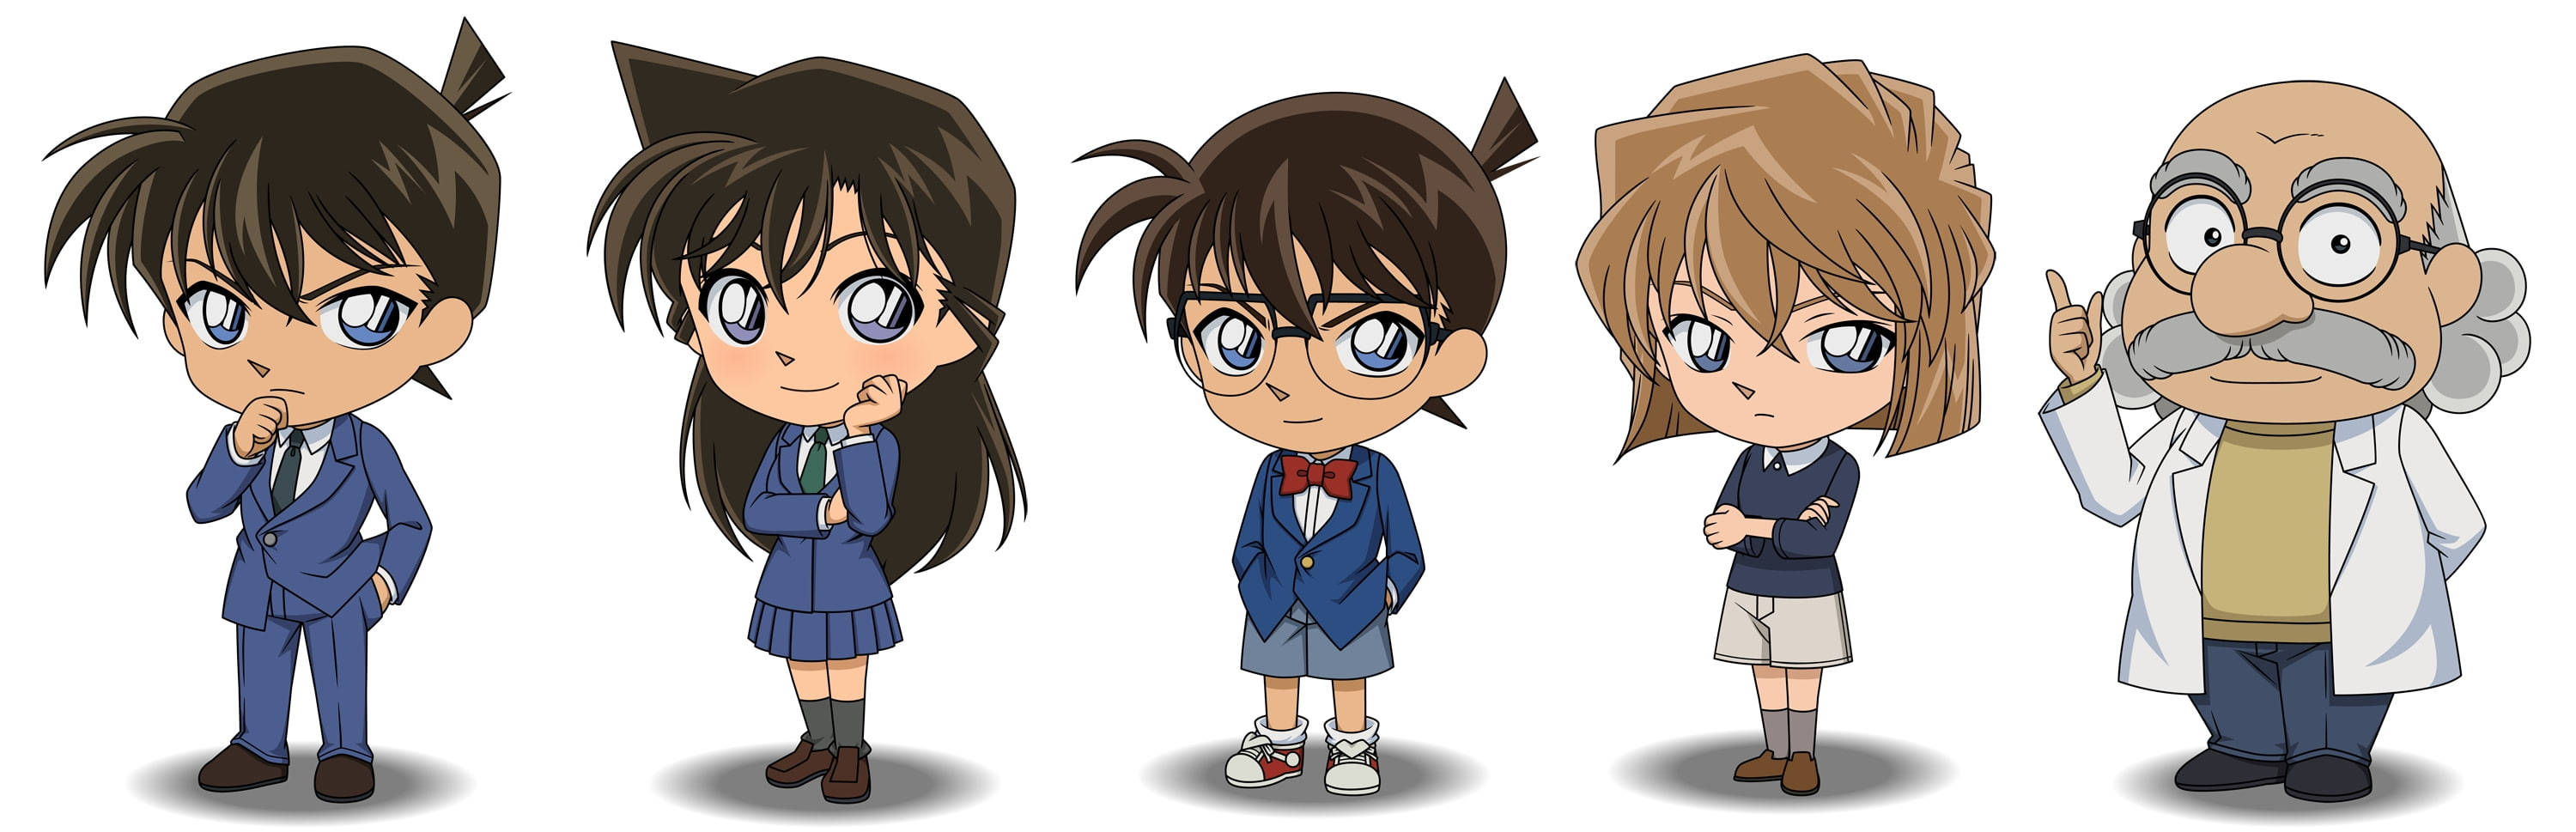 Detective Conan Chibi Characters Wallpaper